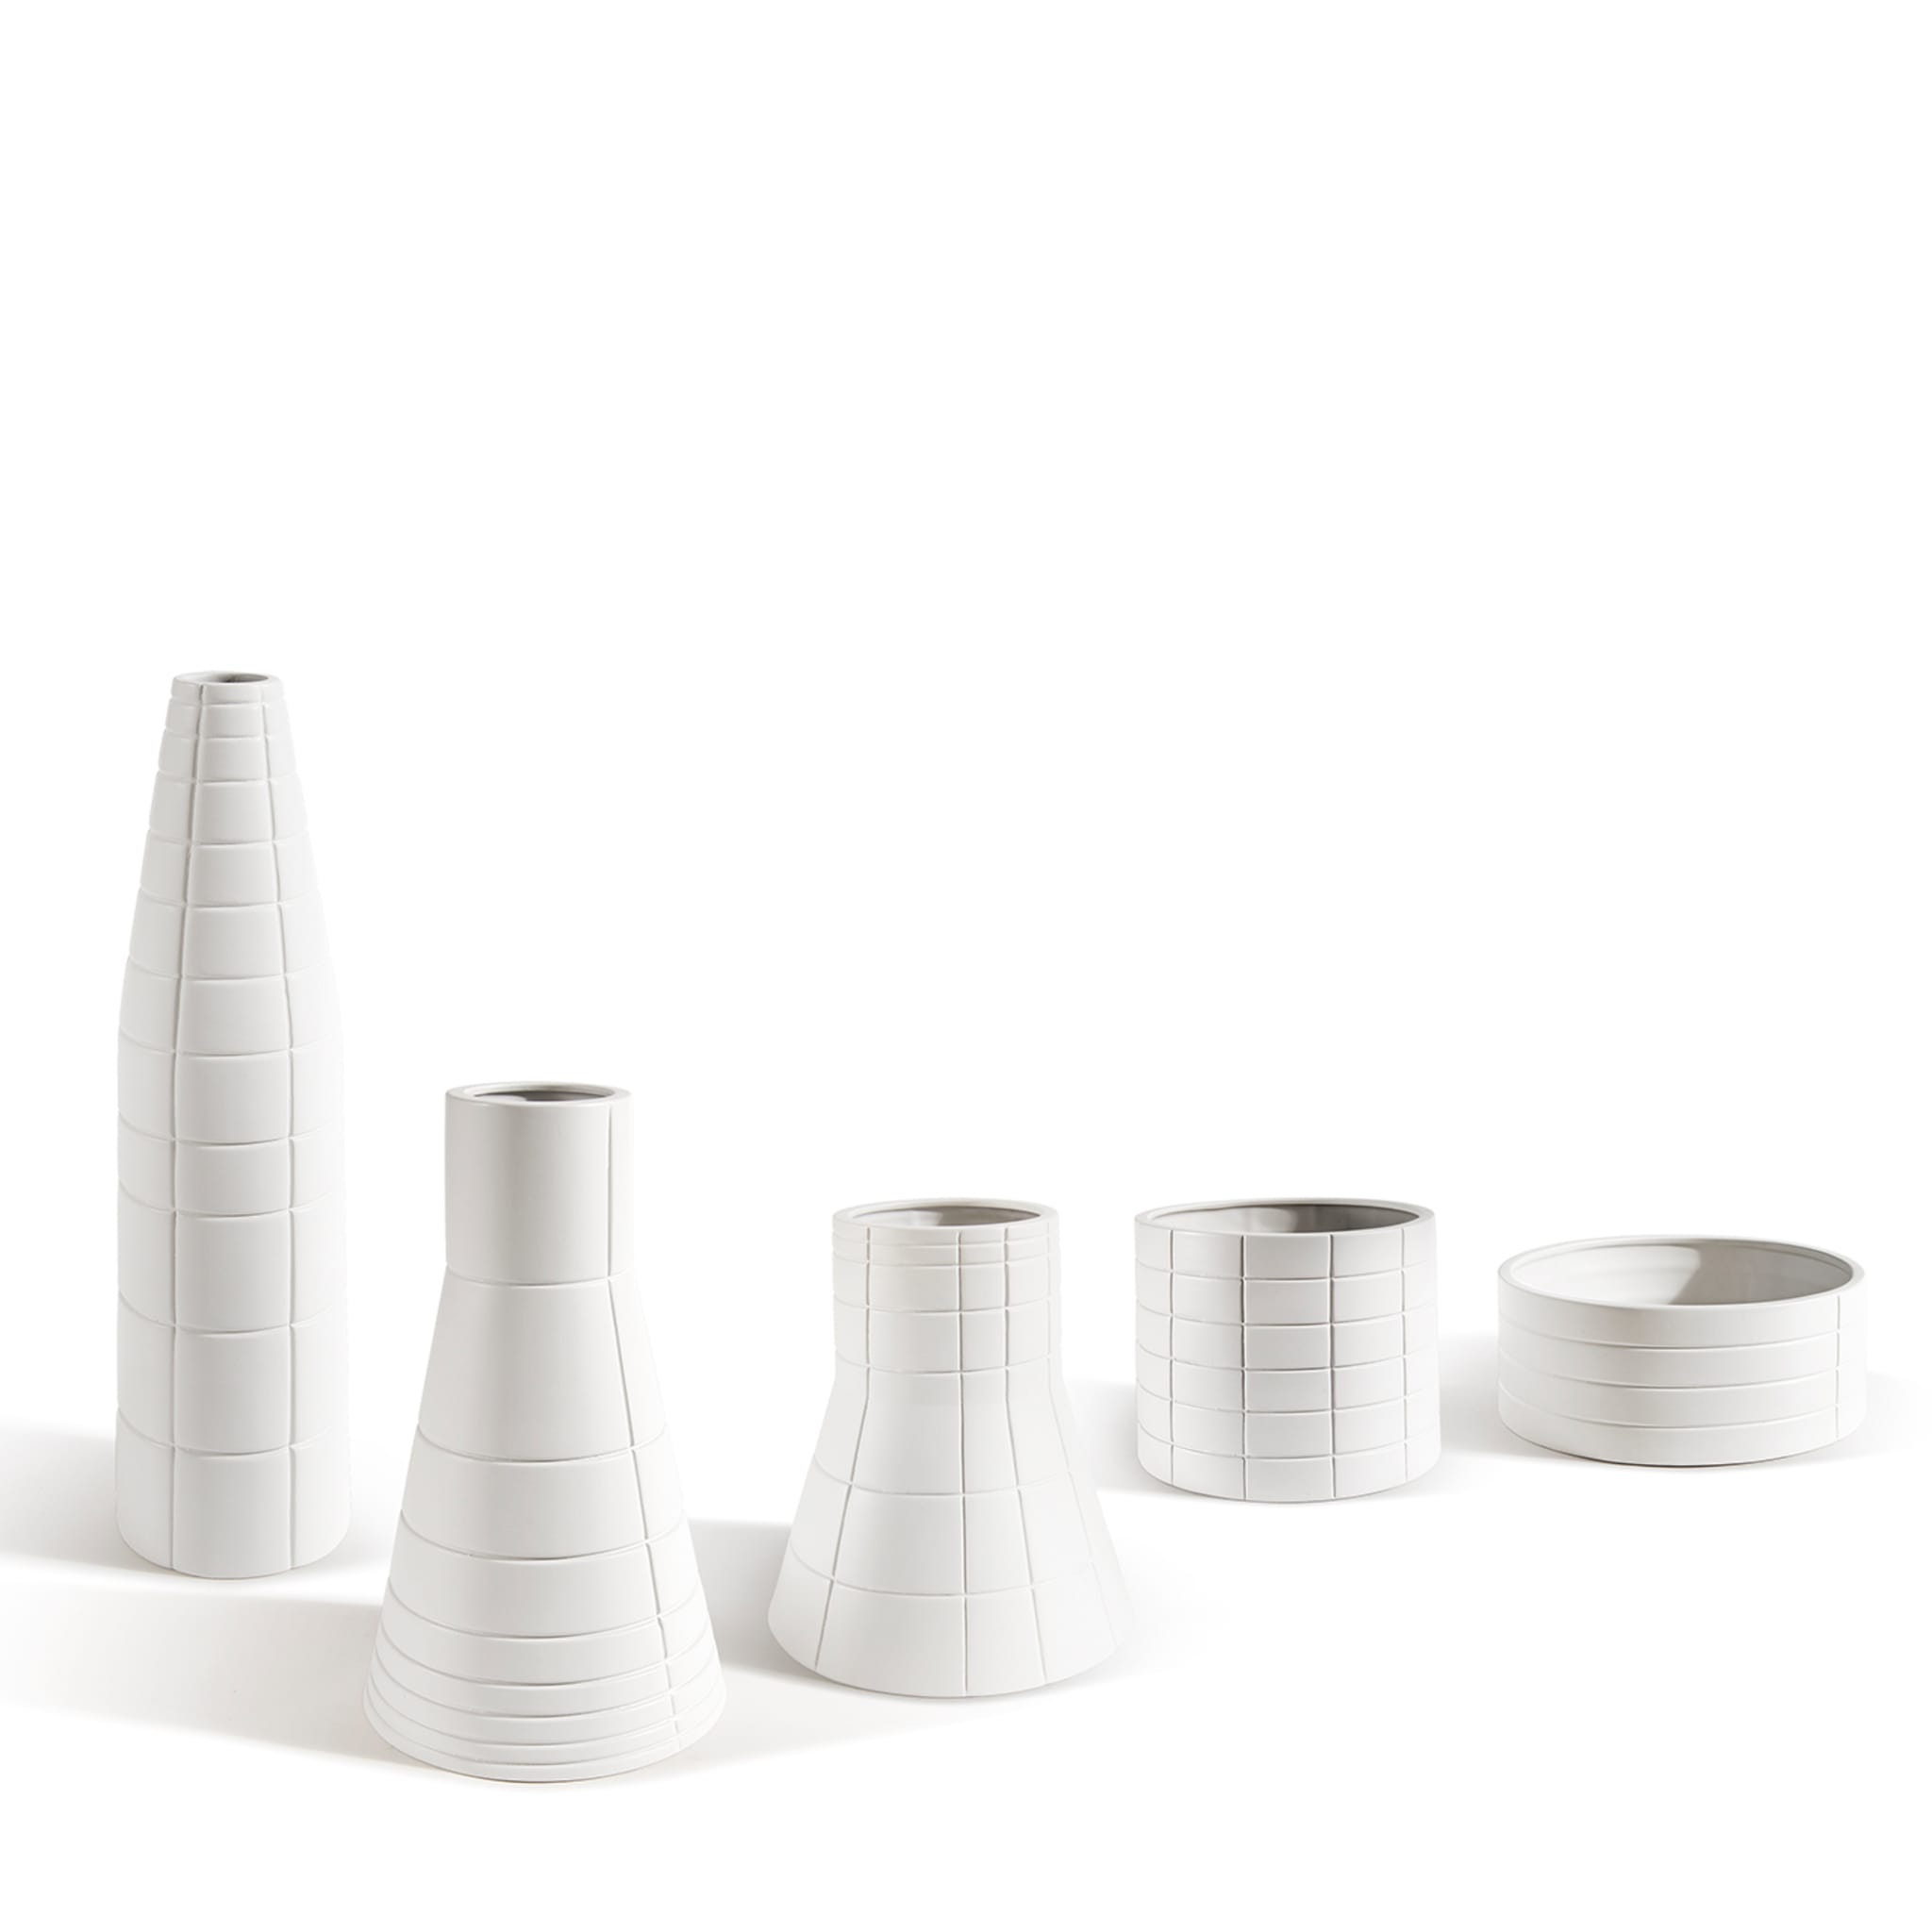 Rikuadra White Ceramic Vase #5 - Alternative view 1